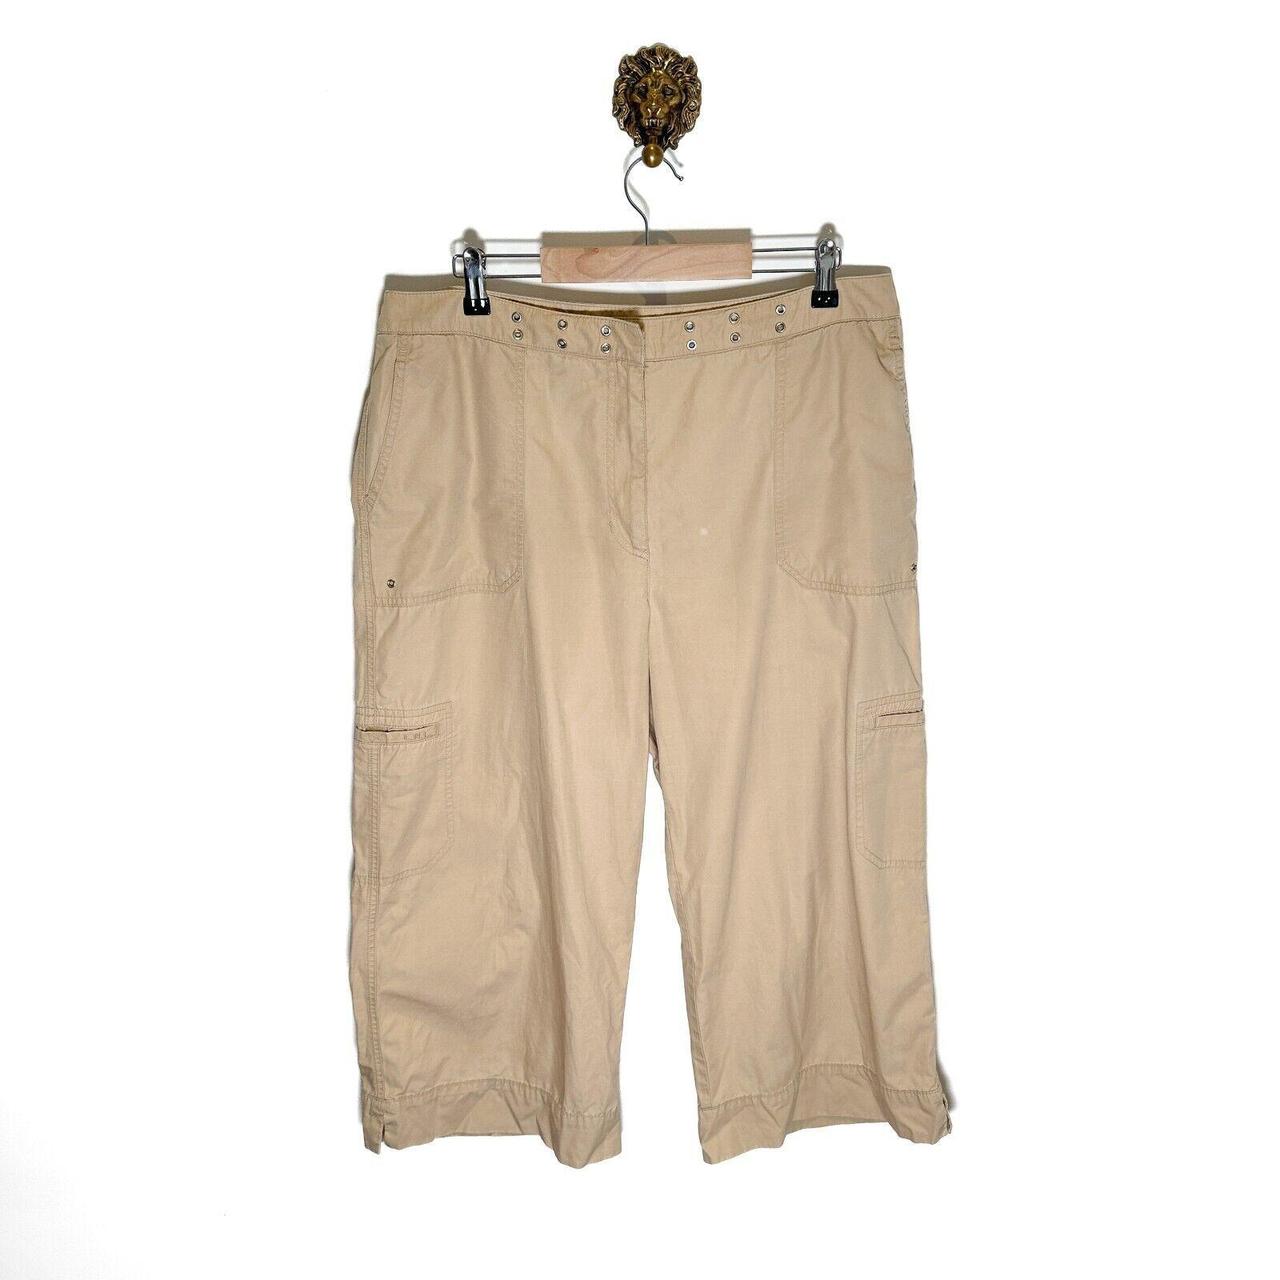 Unionbay cargo pants womens - Gem